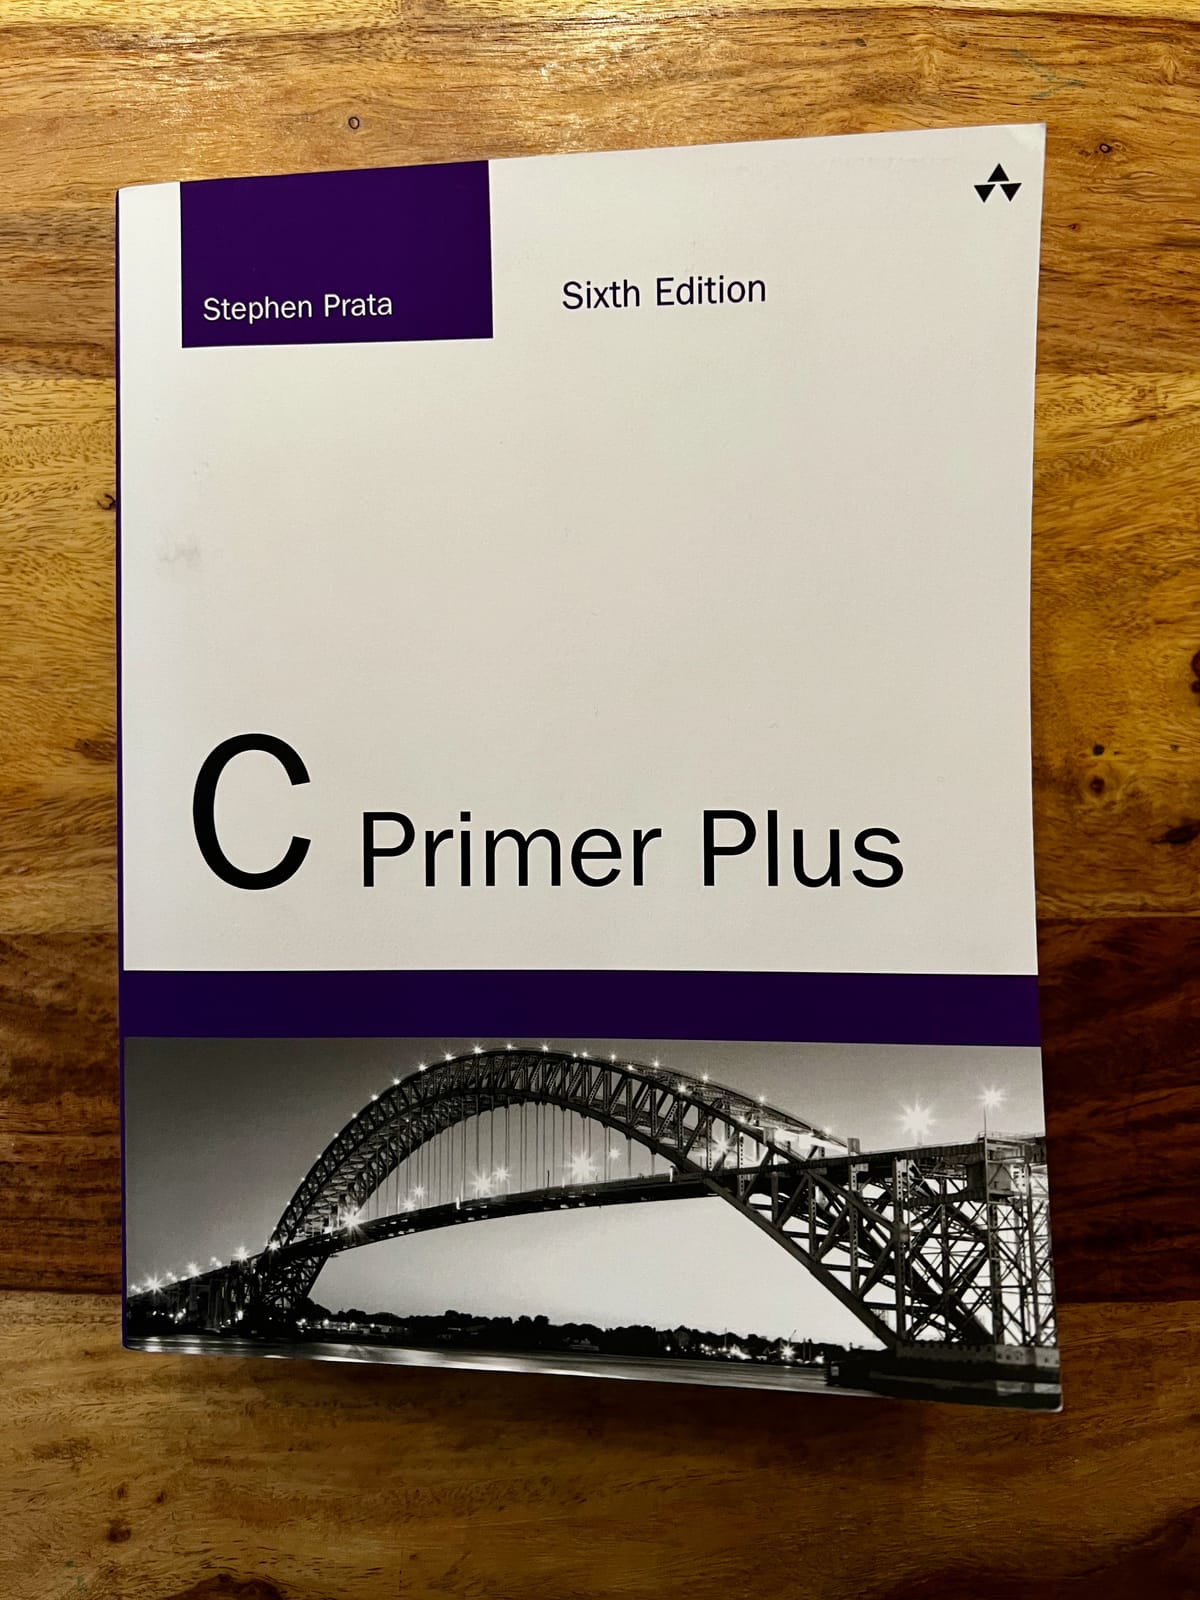 "C Primer Plus" by Stephen Prata